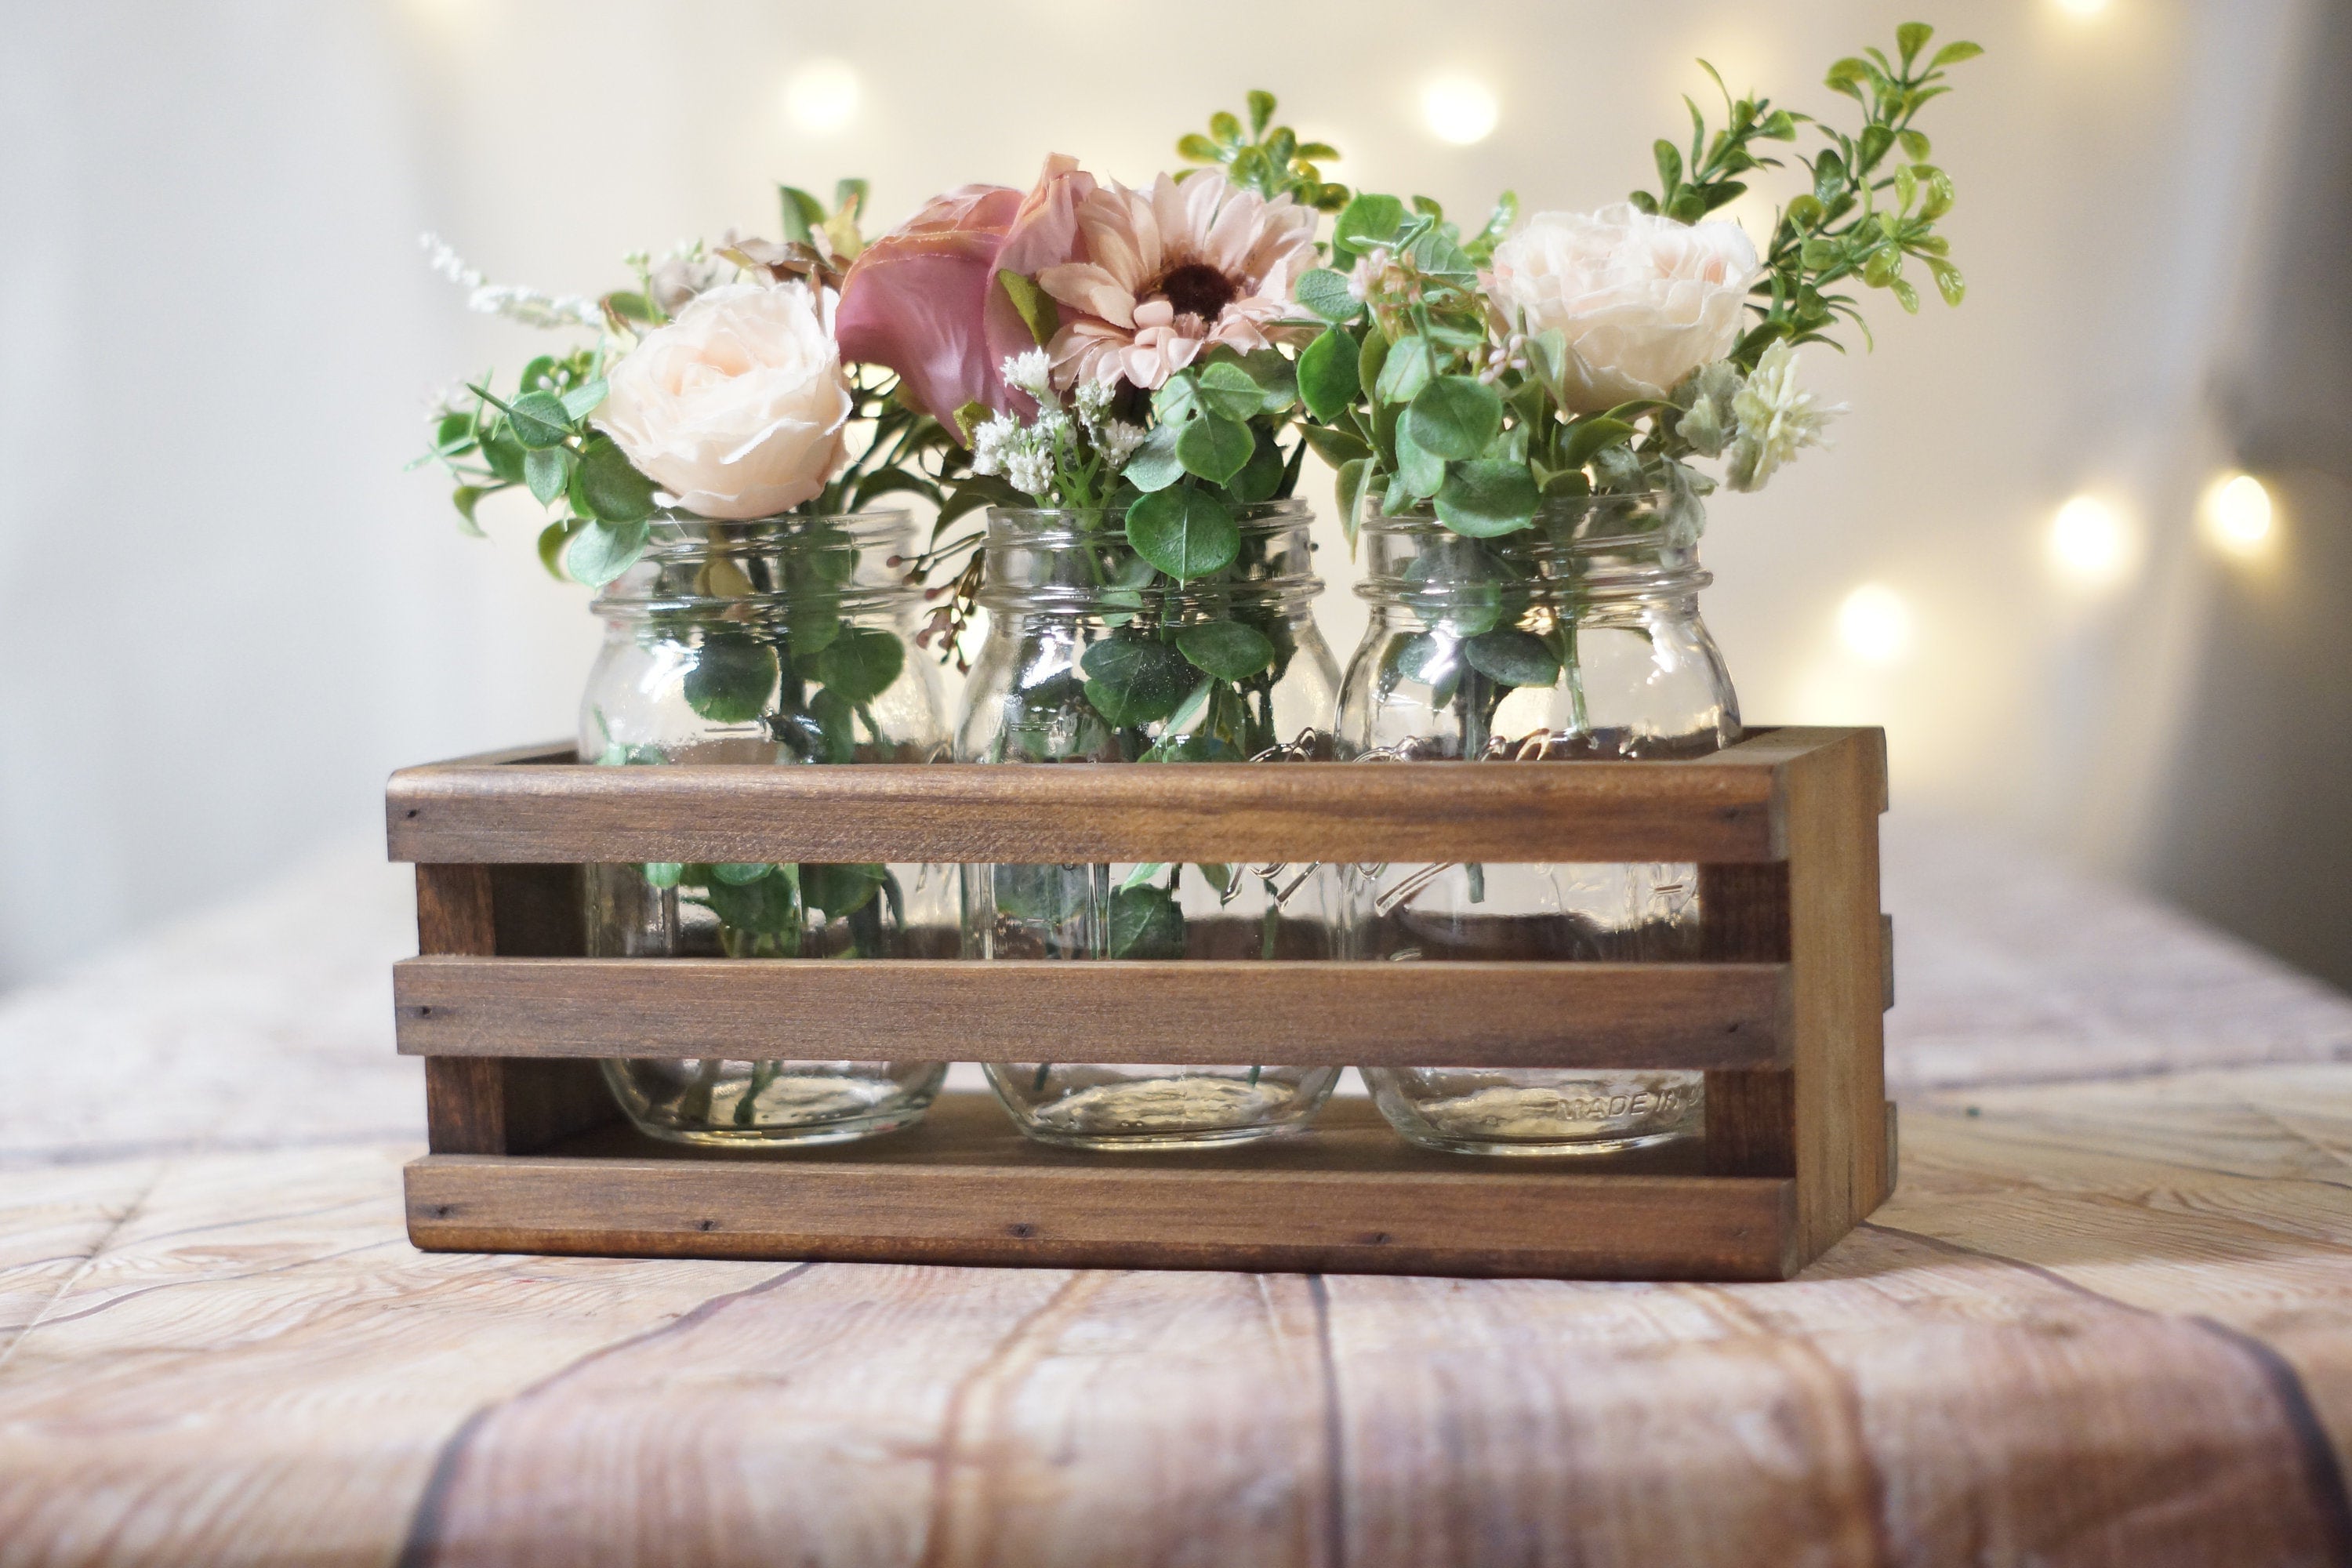 Birch bark wedding decor - Elegant rustic wedding centerpieces - Sweet –  The Little Rustic Farm